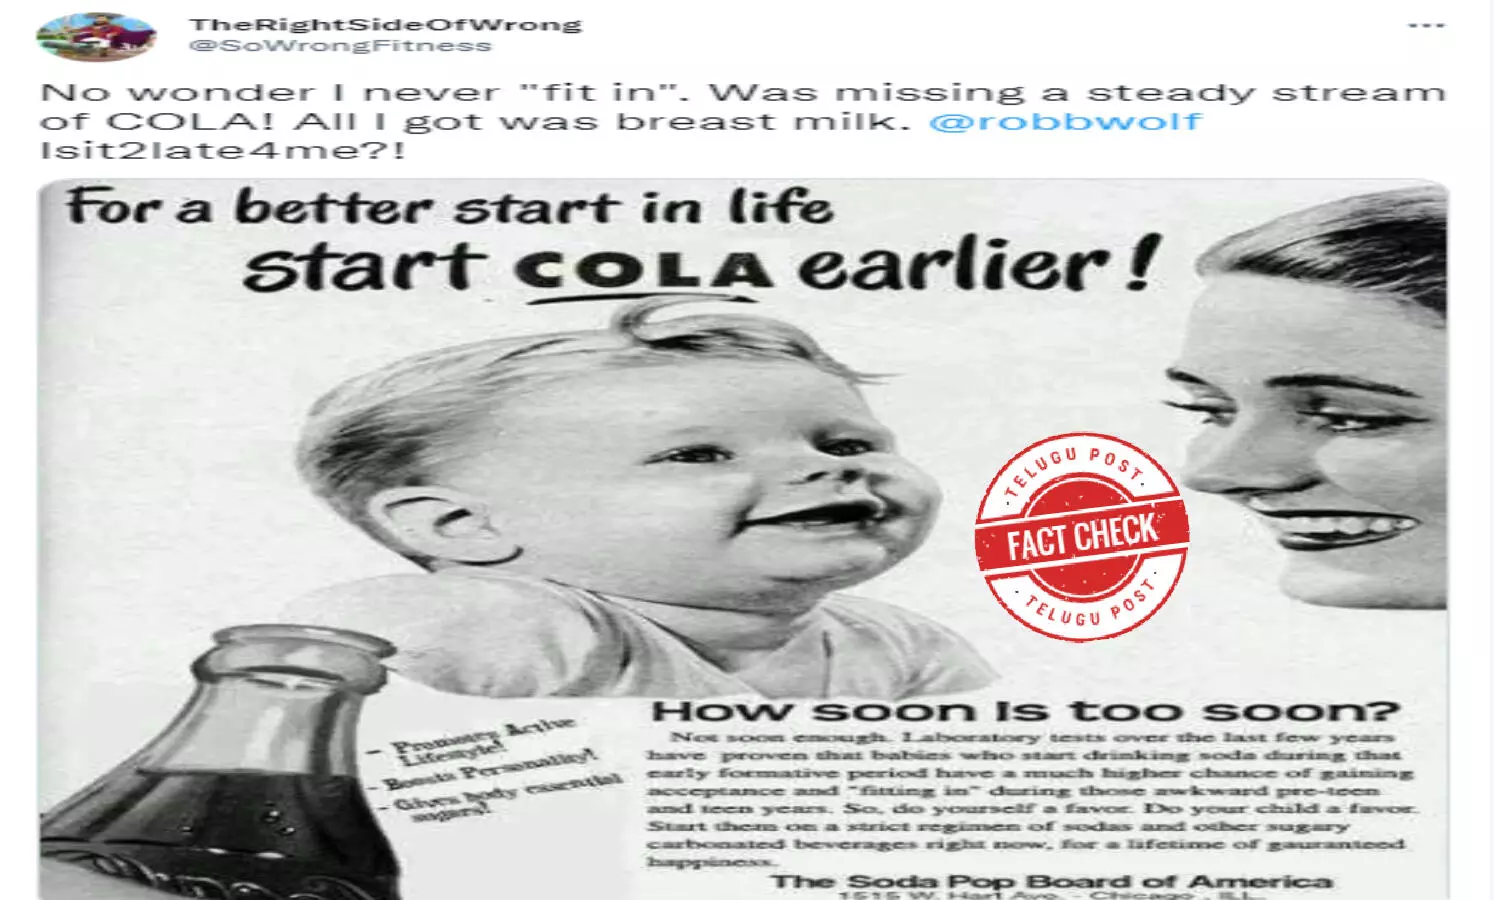 Fact Check: Vintage Ad On Soda Makes FALSE Claim on Soda For Babies